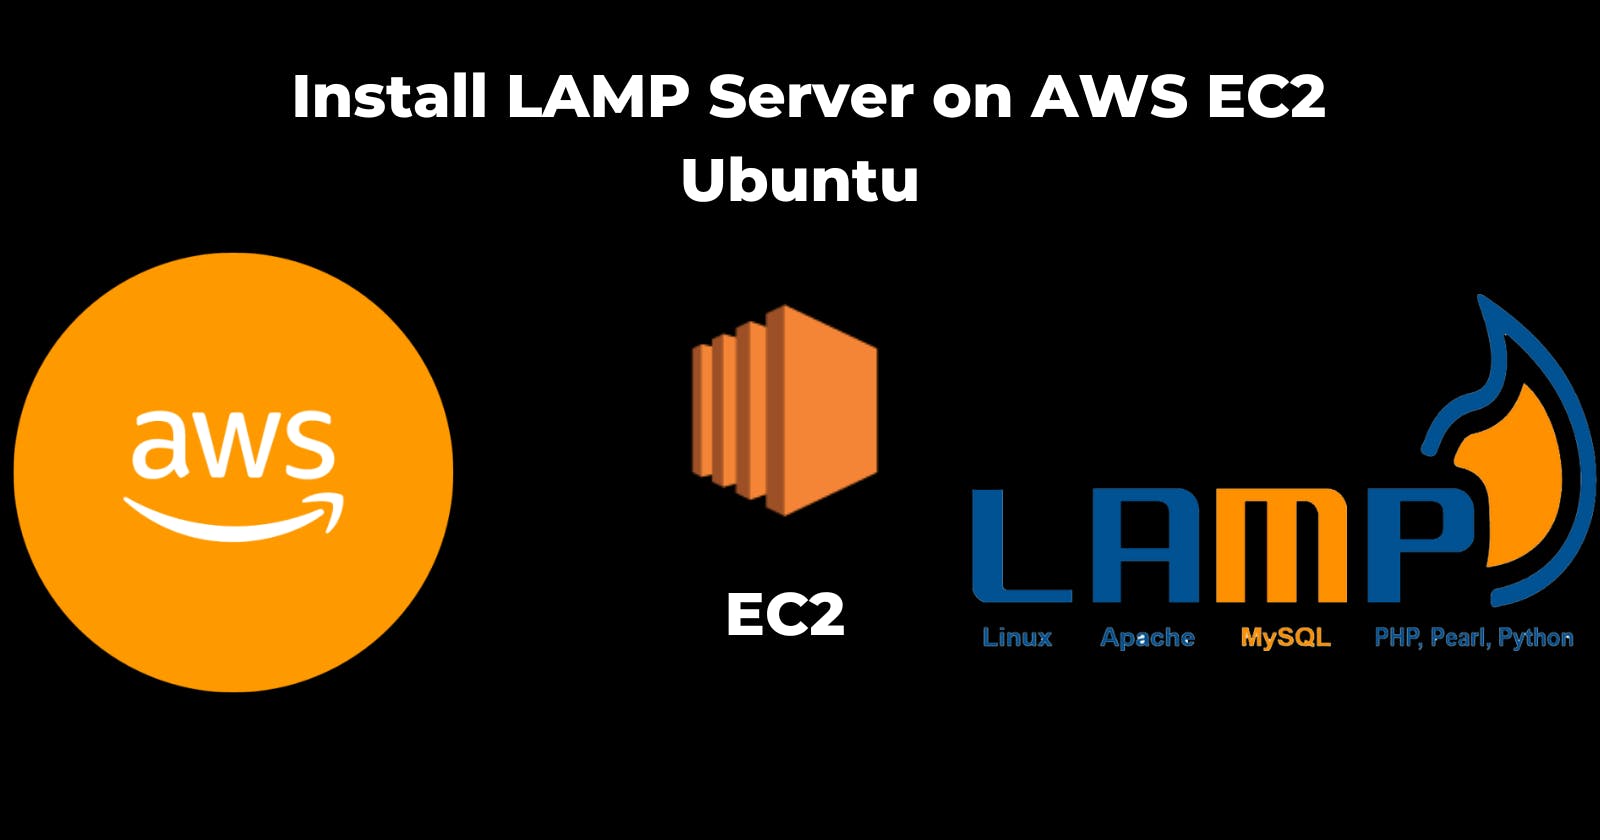 How to Install LAMP Server on AWS EC2 Ubuntu